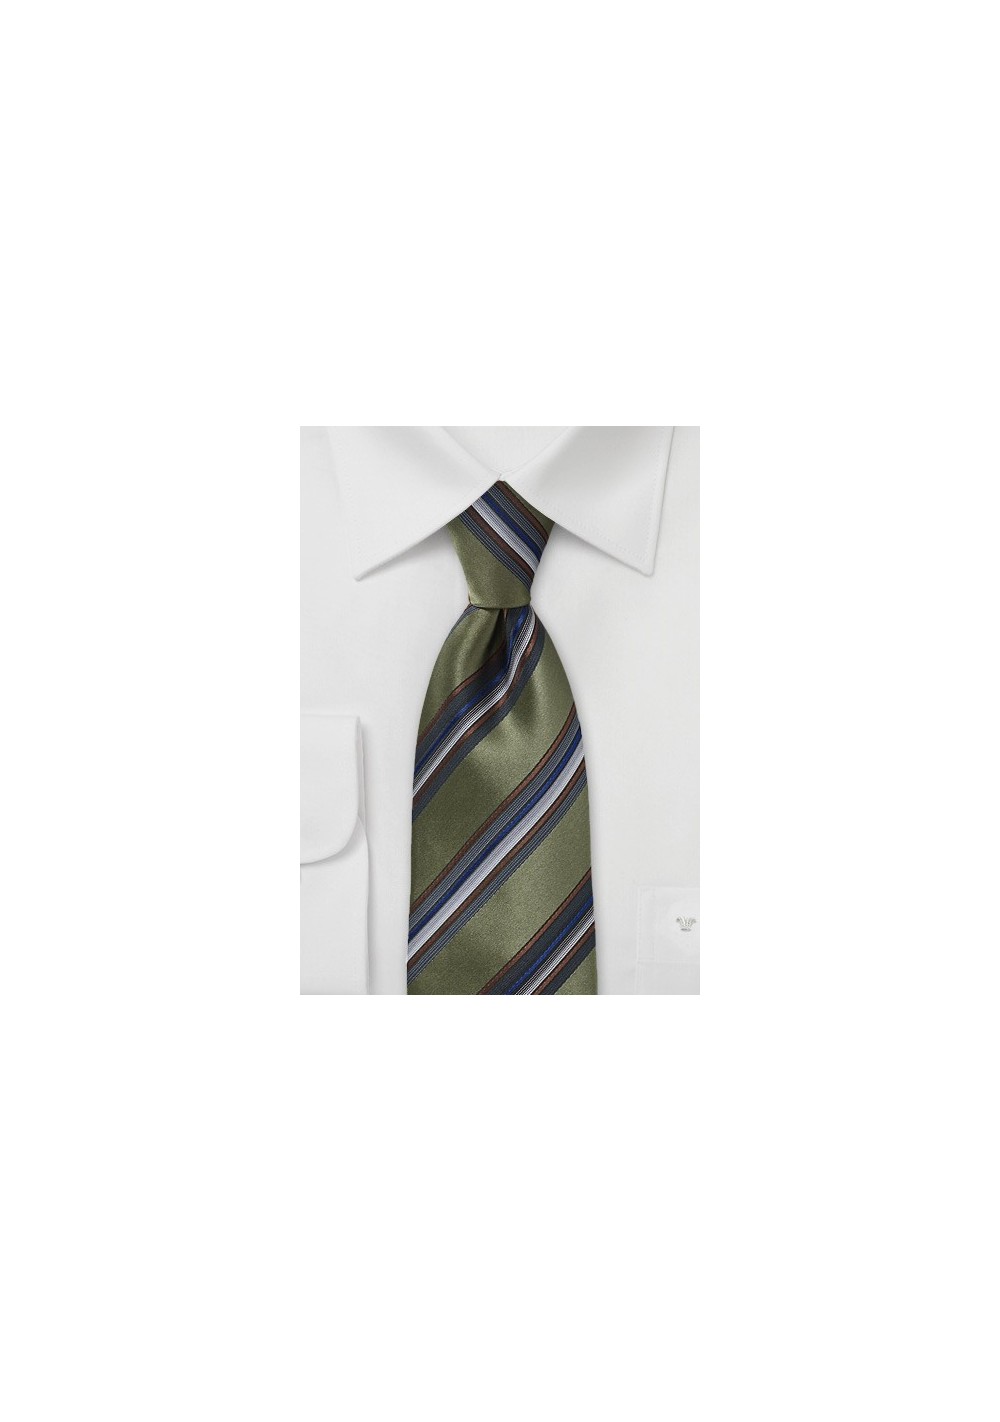 Striped Tie in Olive Green